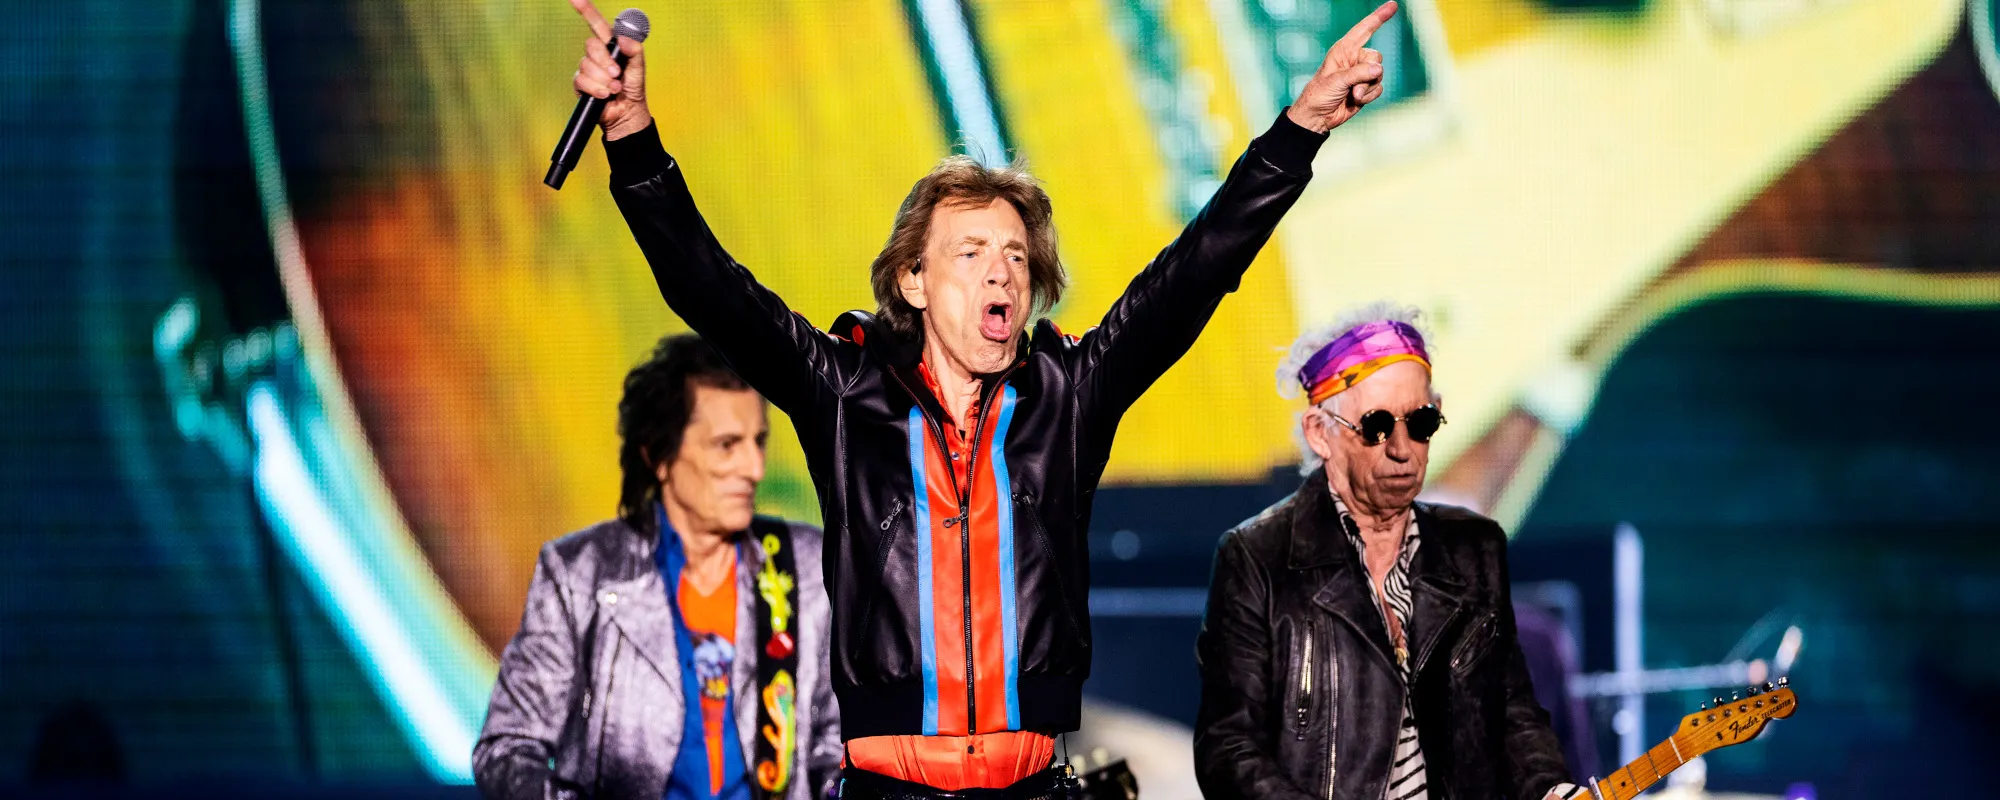 Watch: Kevin Bacon, Jimmy Fallon Rewrite the Rolling Stones’ “Paint It, Black”